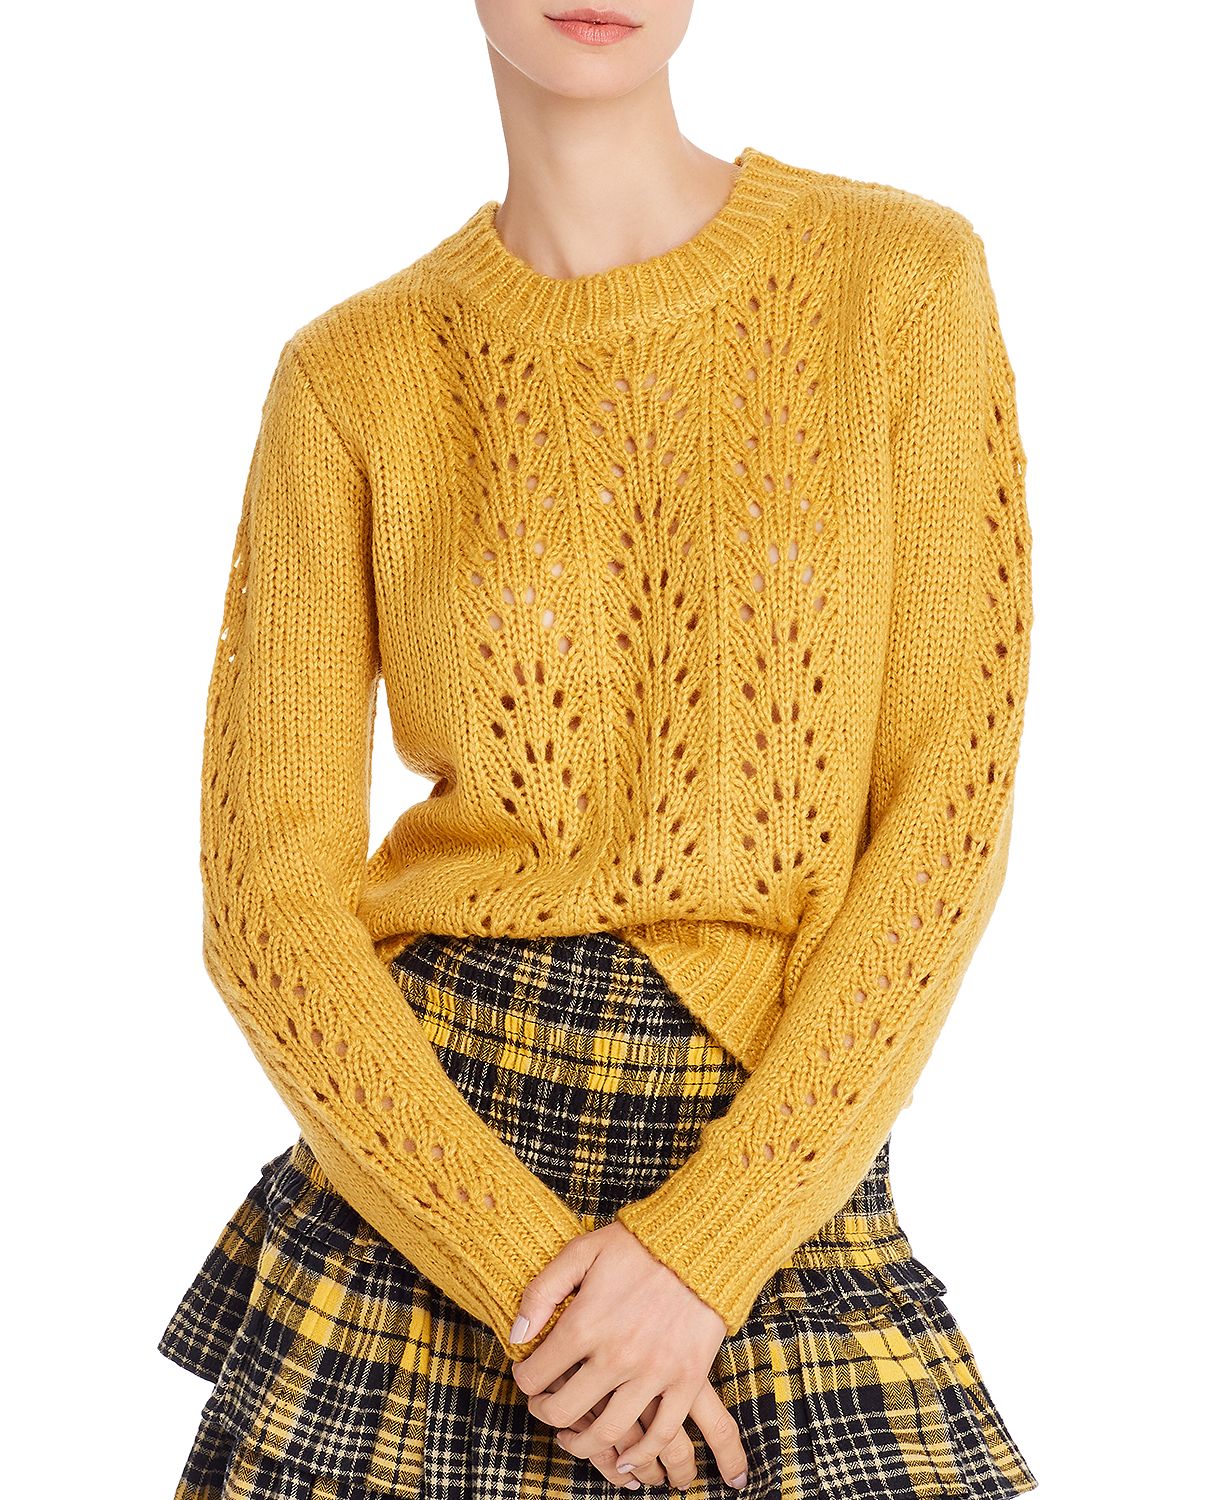 woocommerce-673321-2209615.cloudwaysapps.com-aqua-womens-yellow-lace-knit-sweater